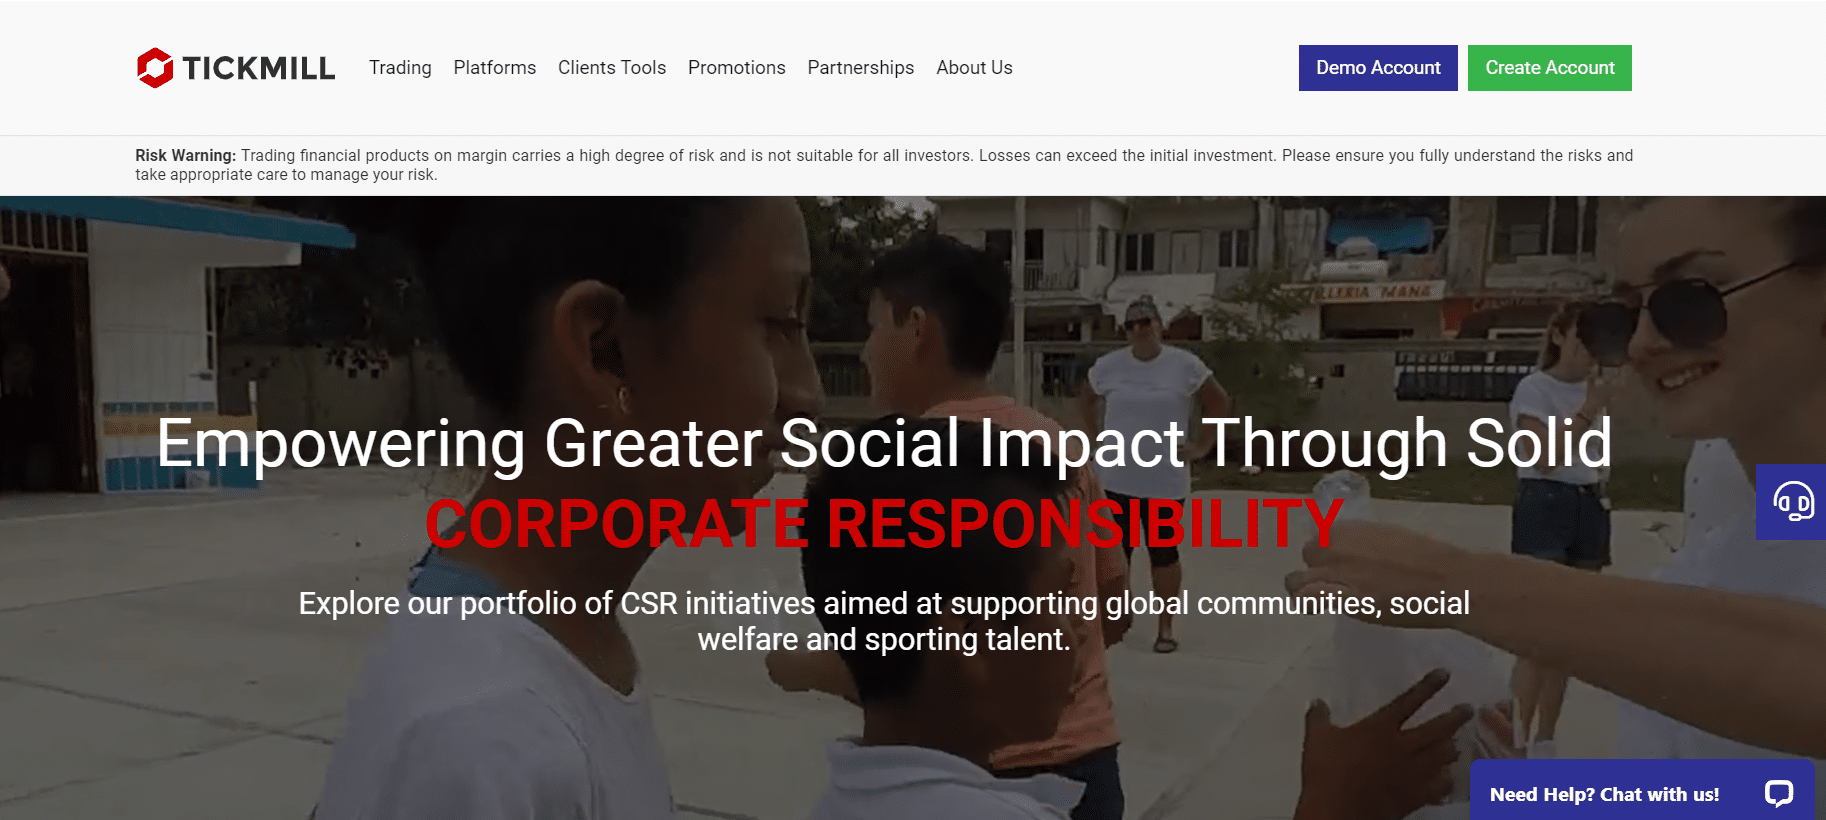 Tickmill Corporate Social Responsibility